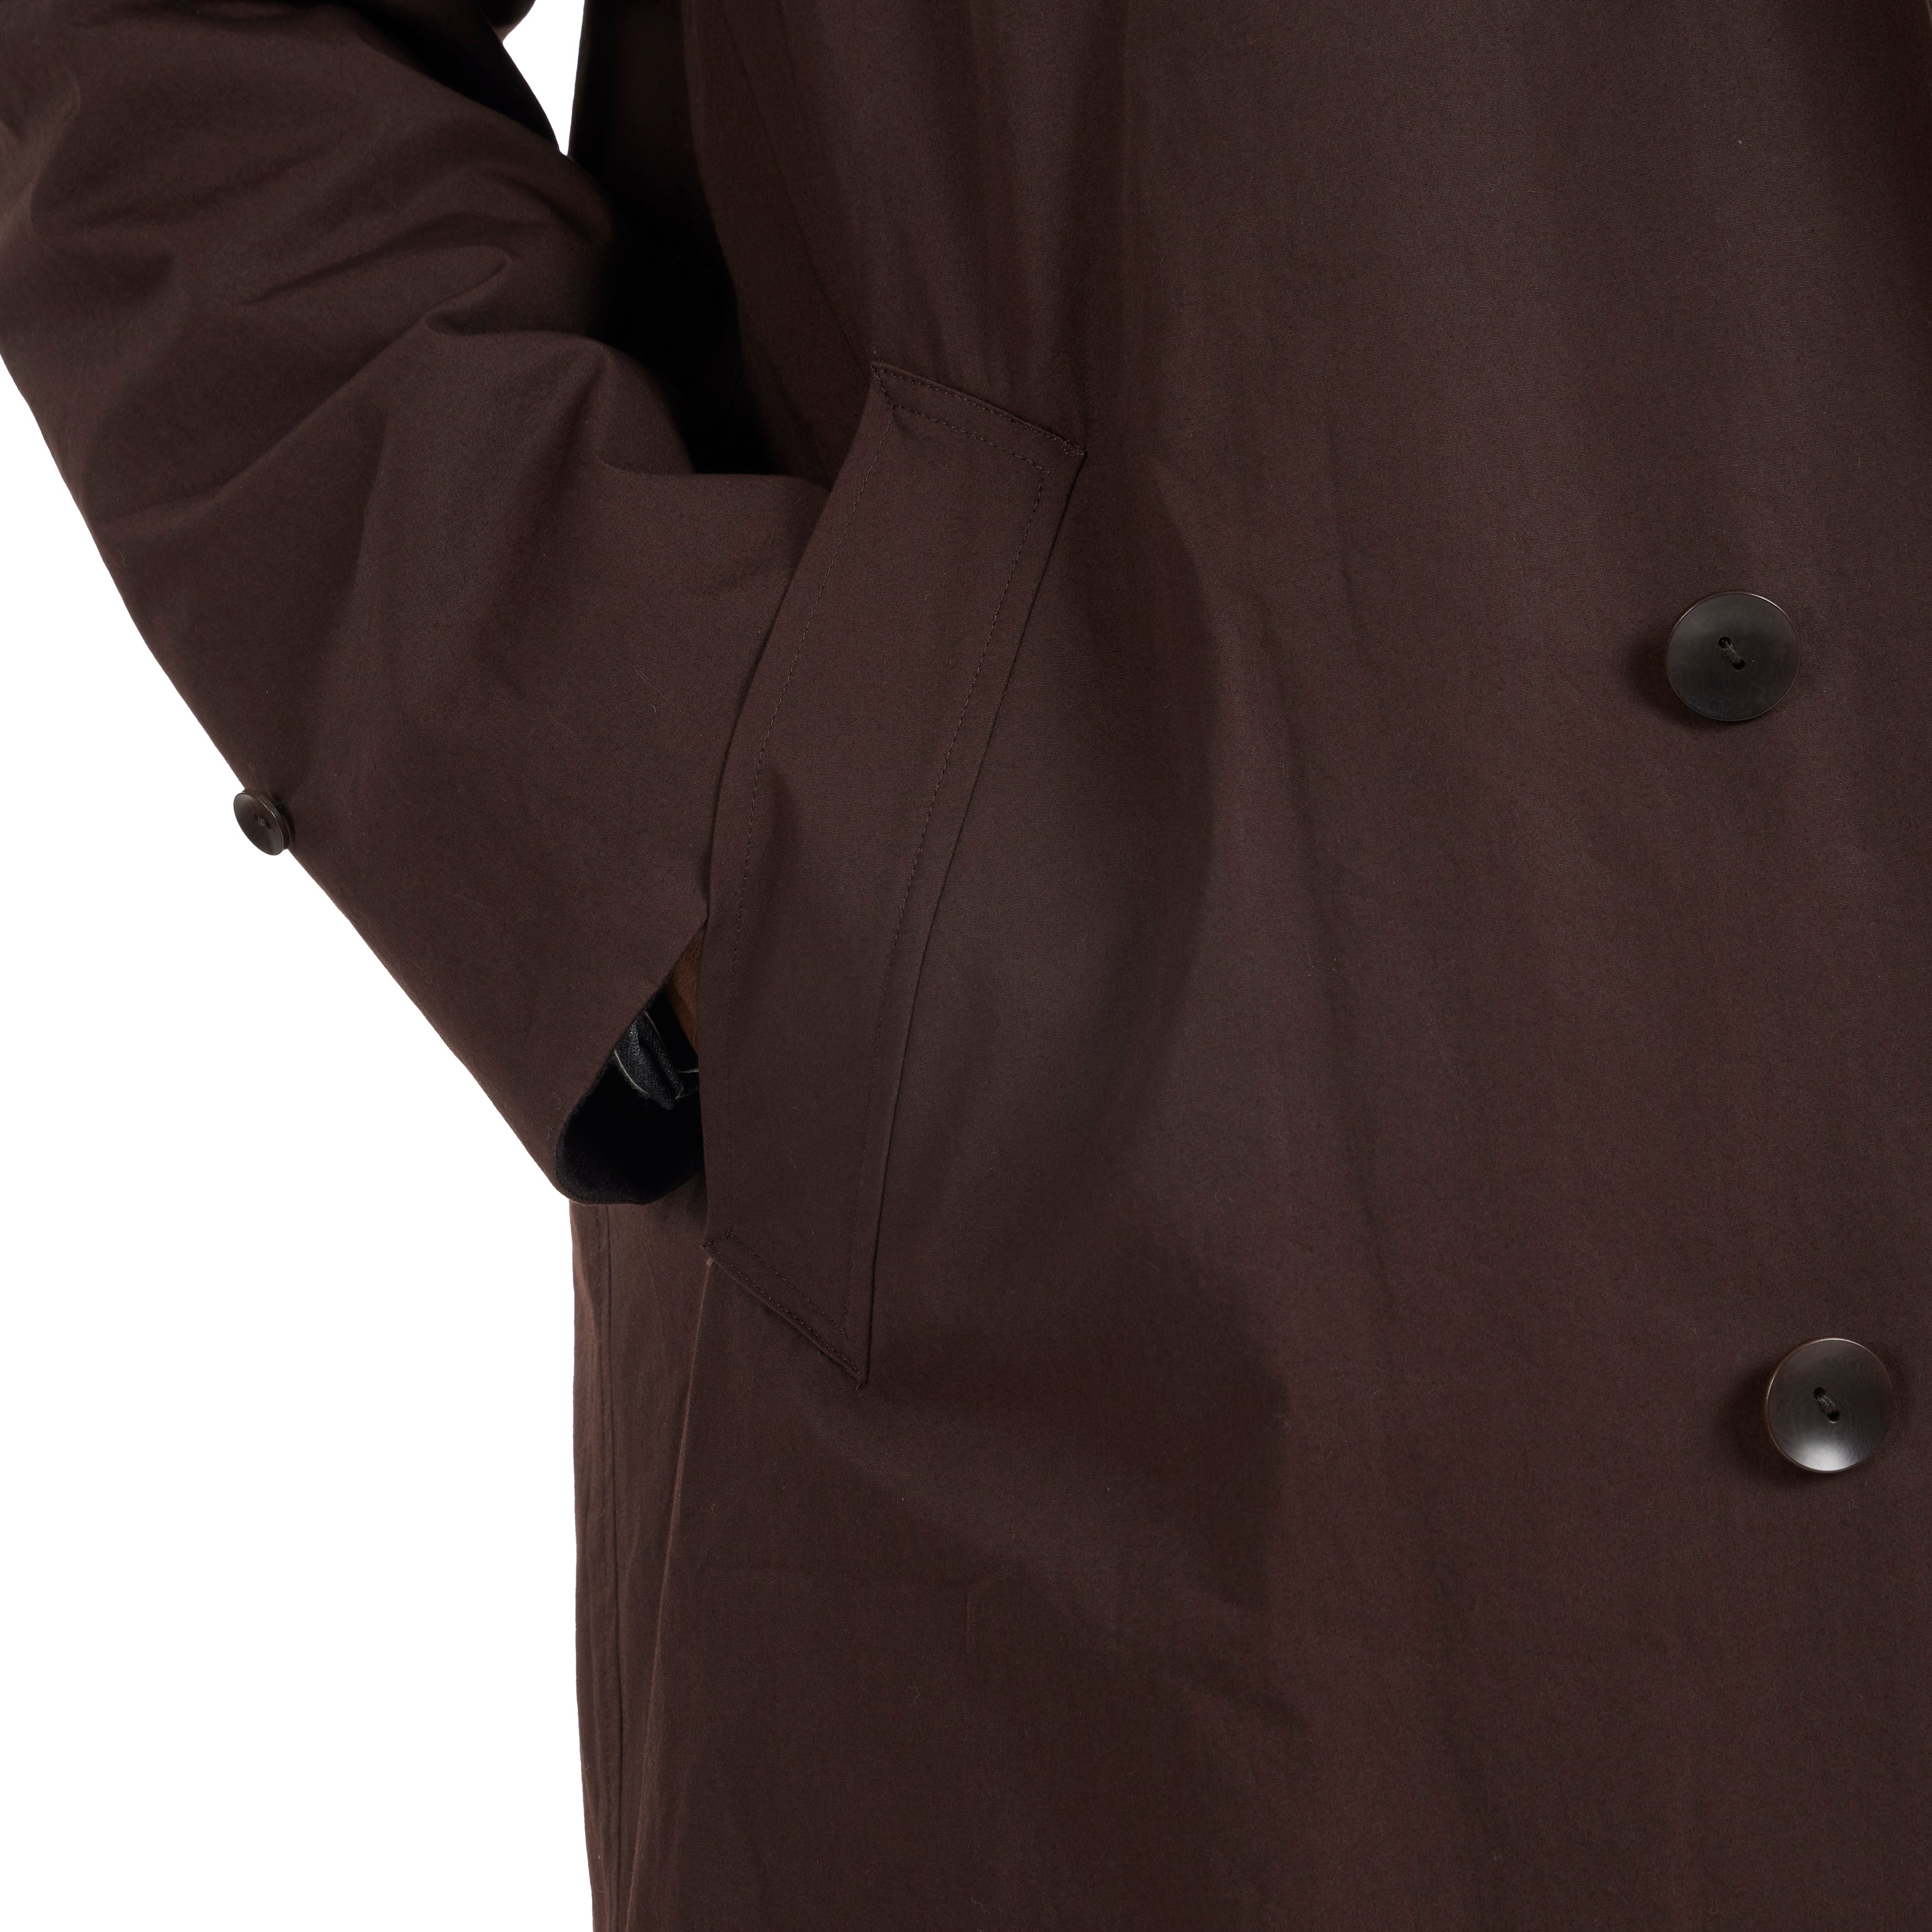 Ruiz Weather Resistant Cashmere Lined Coat